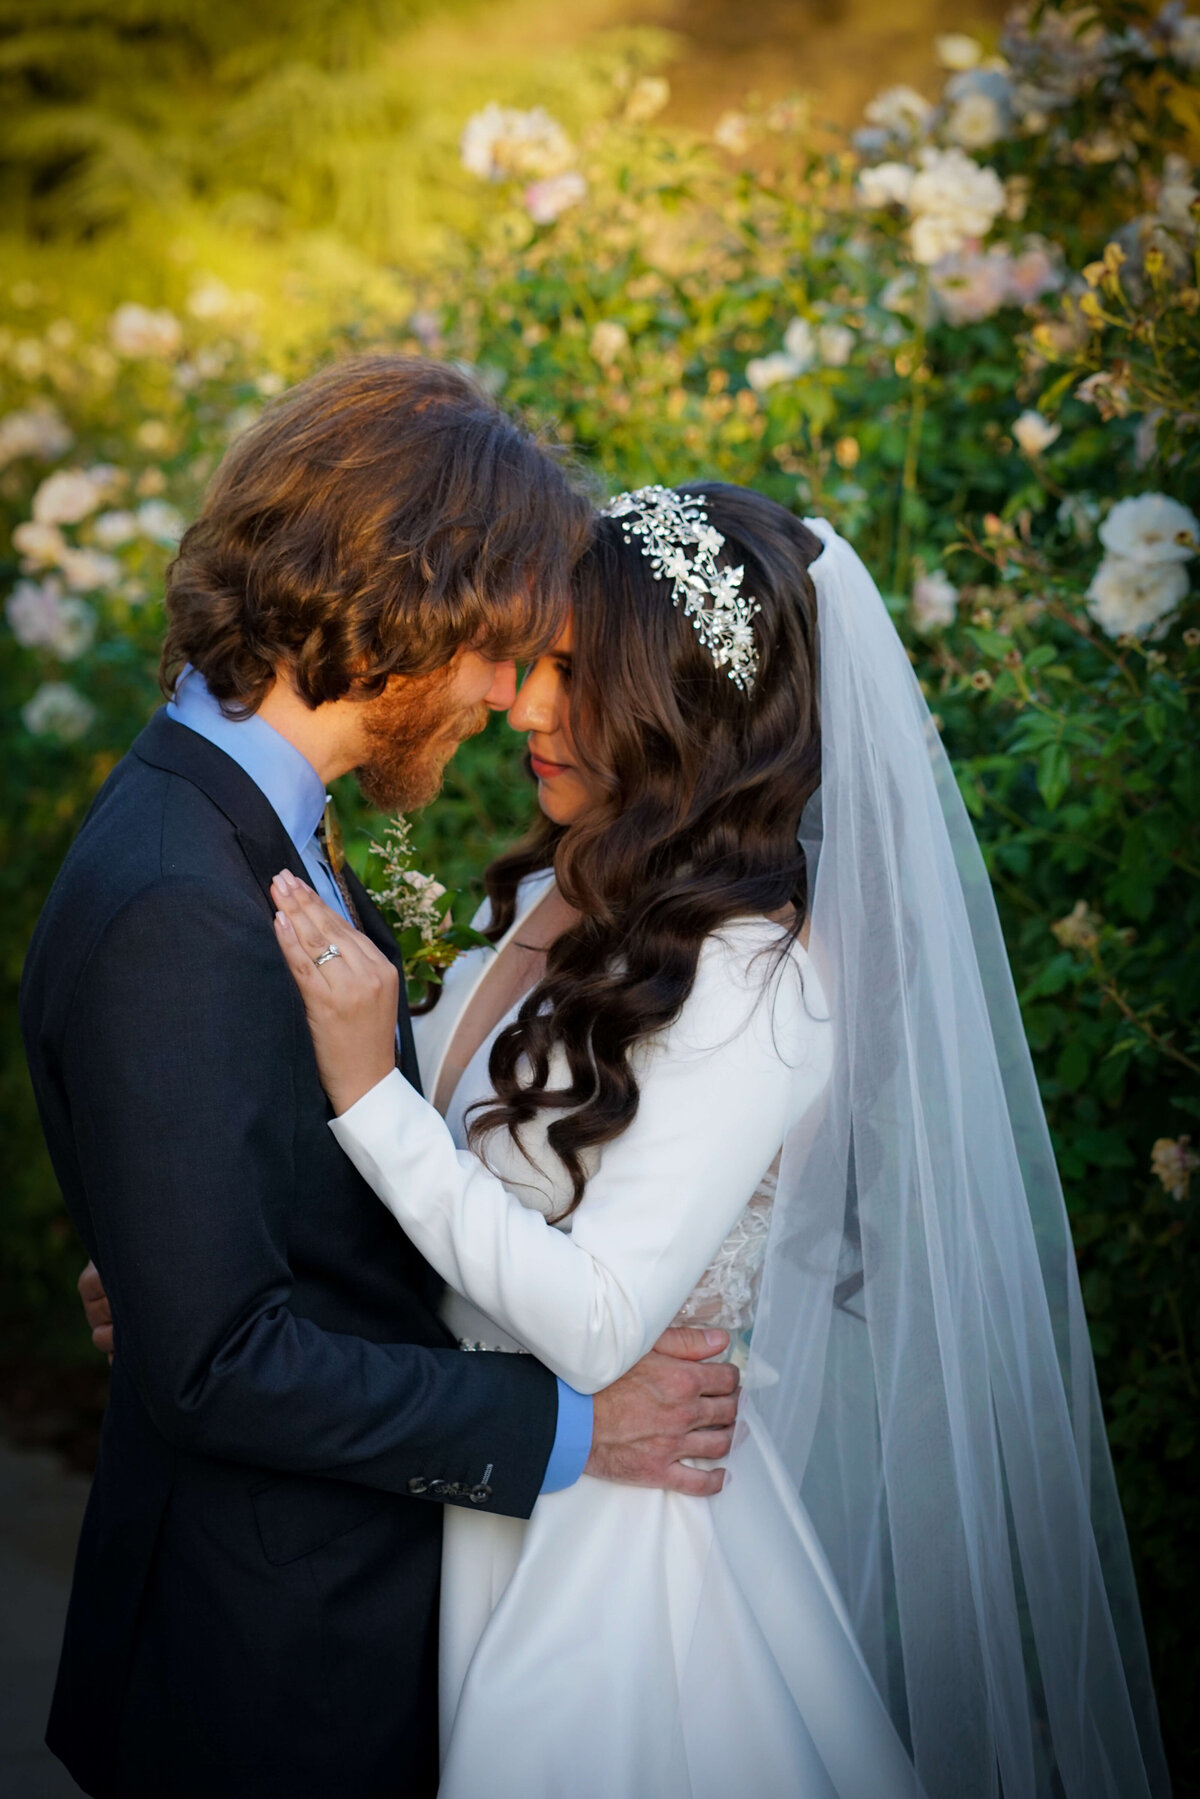 KS-Gray-Photography-newport-beach-wedding-photographer-wedding-couple